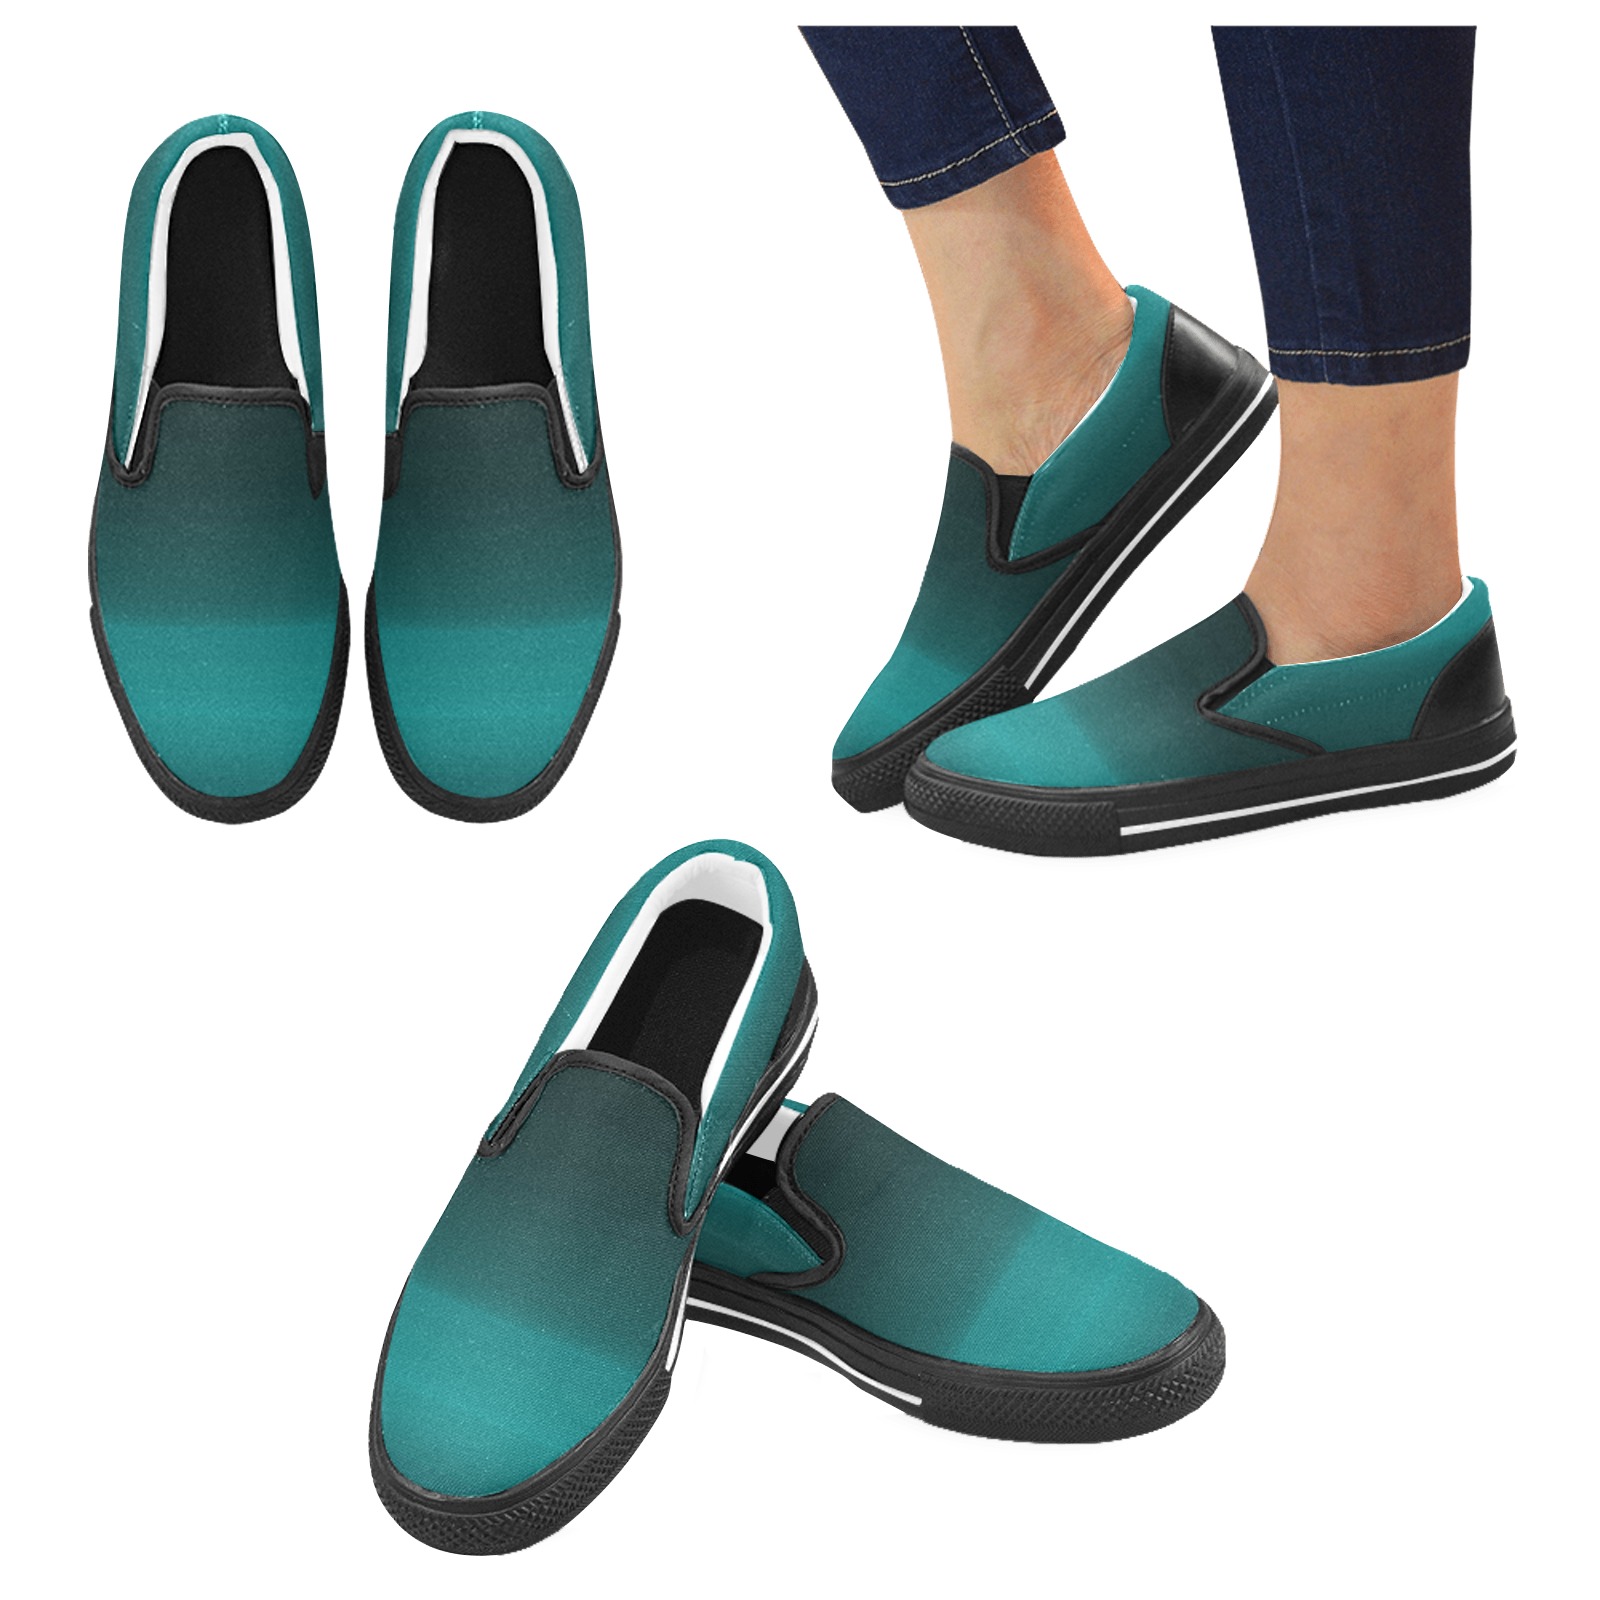 blu blk black Men's Slip-on Canvas Shoes (Model 019)